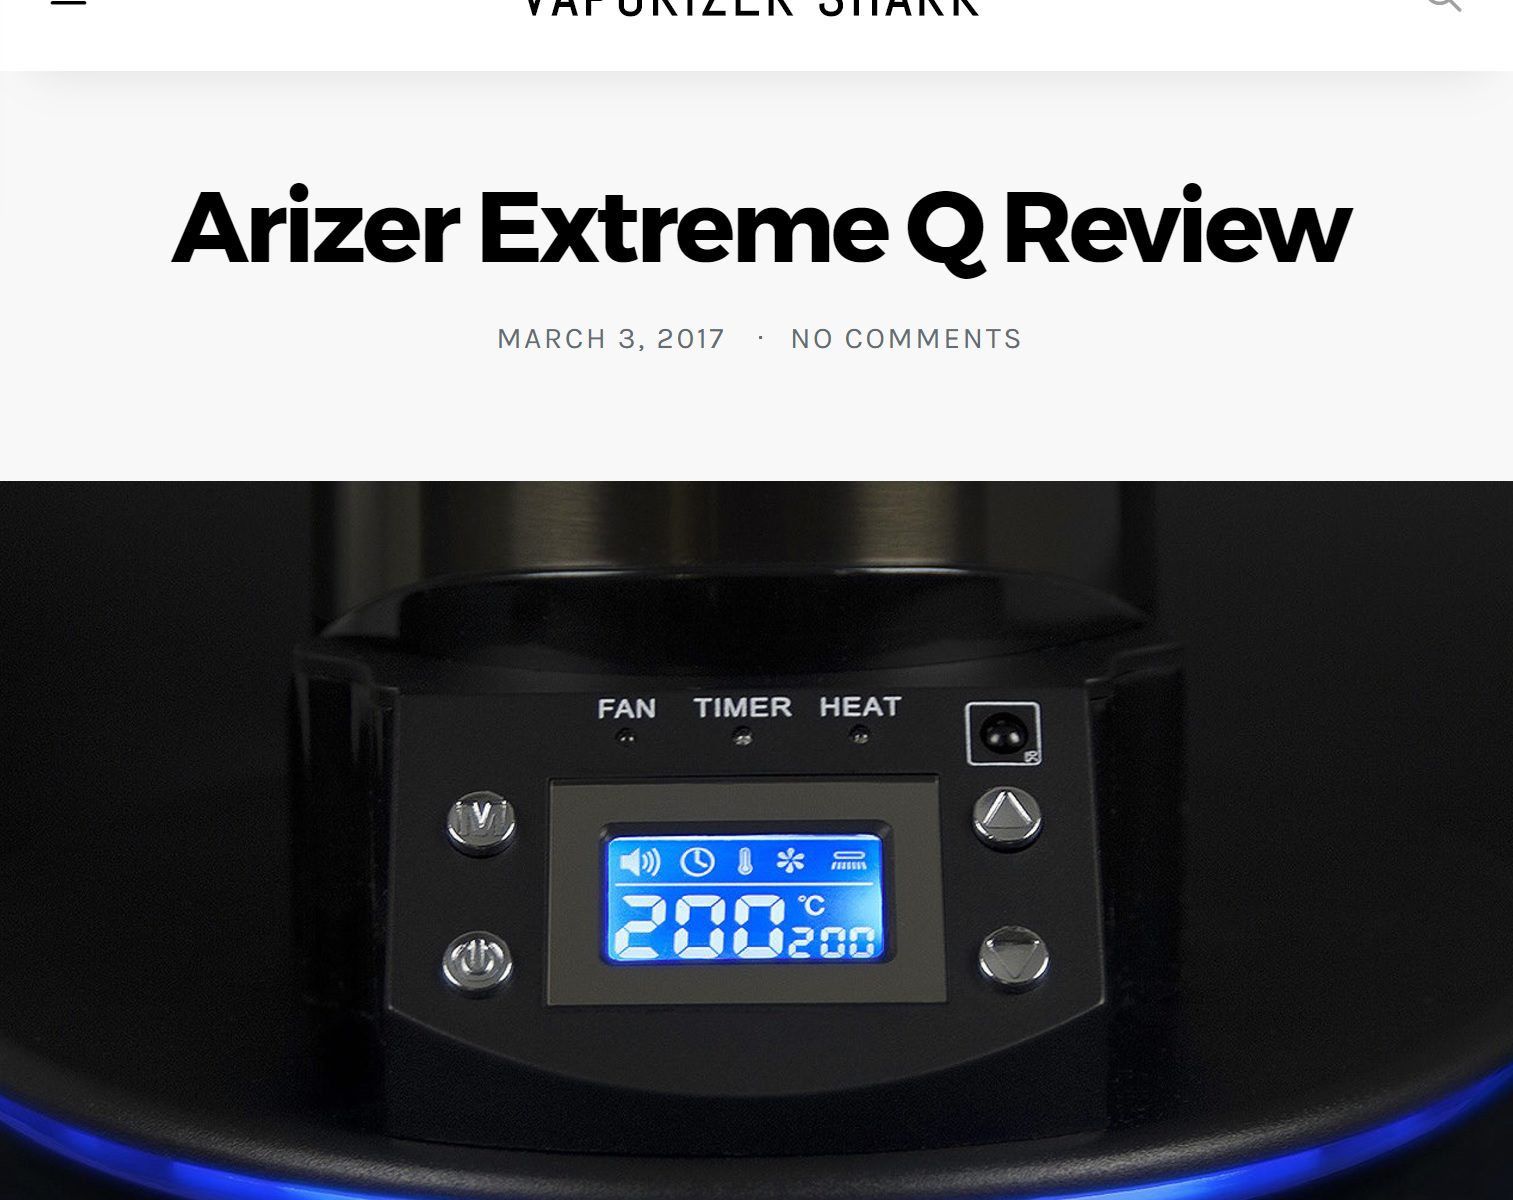 VaporizerShark.com's Arizer Extreme Q Review